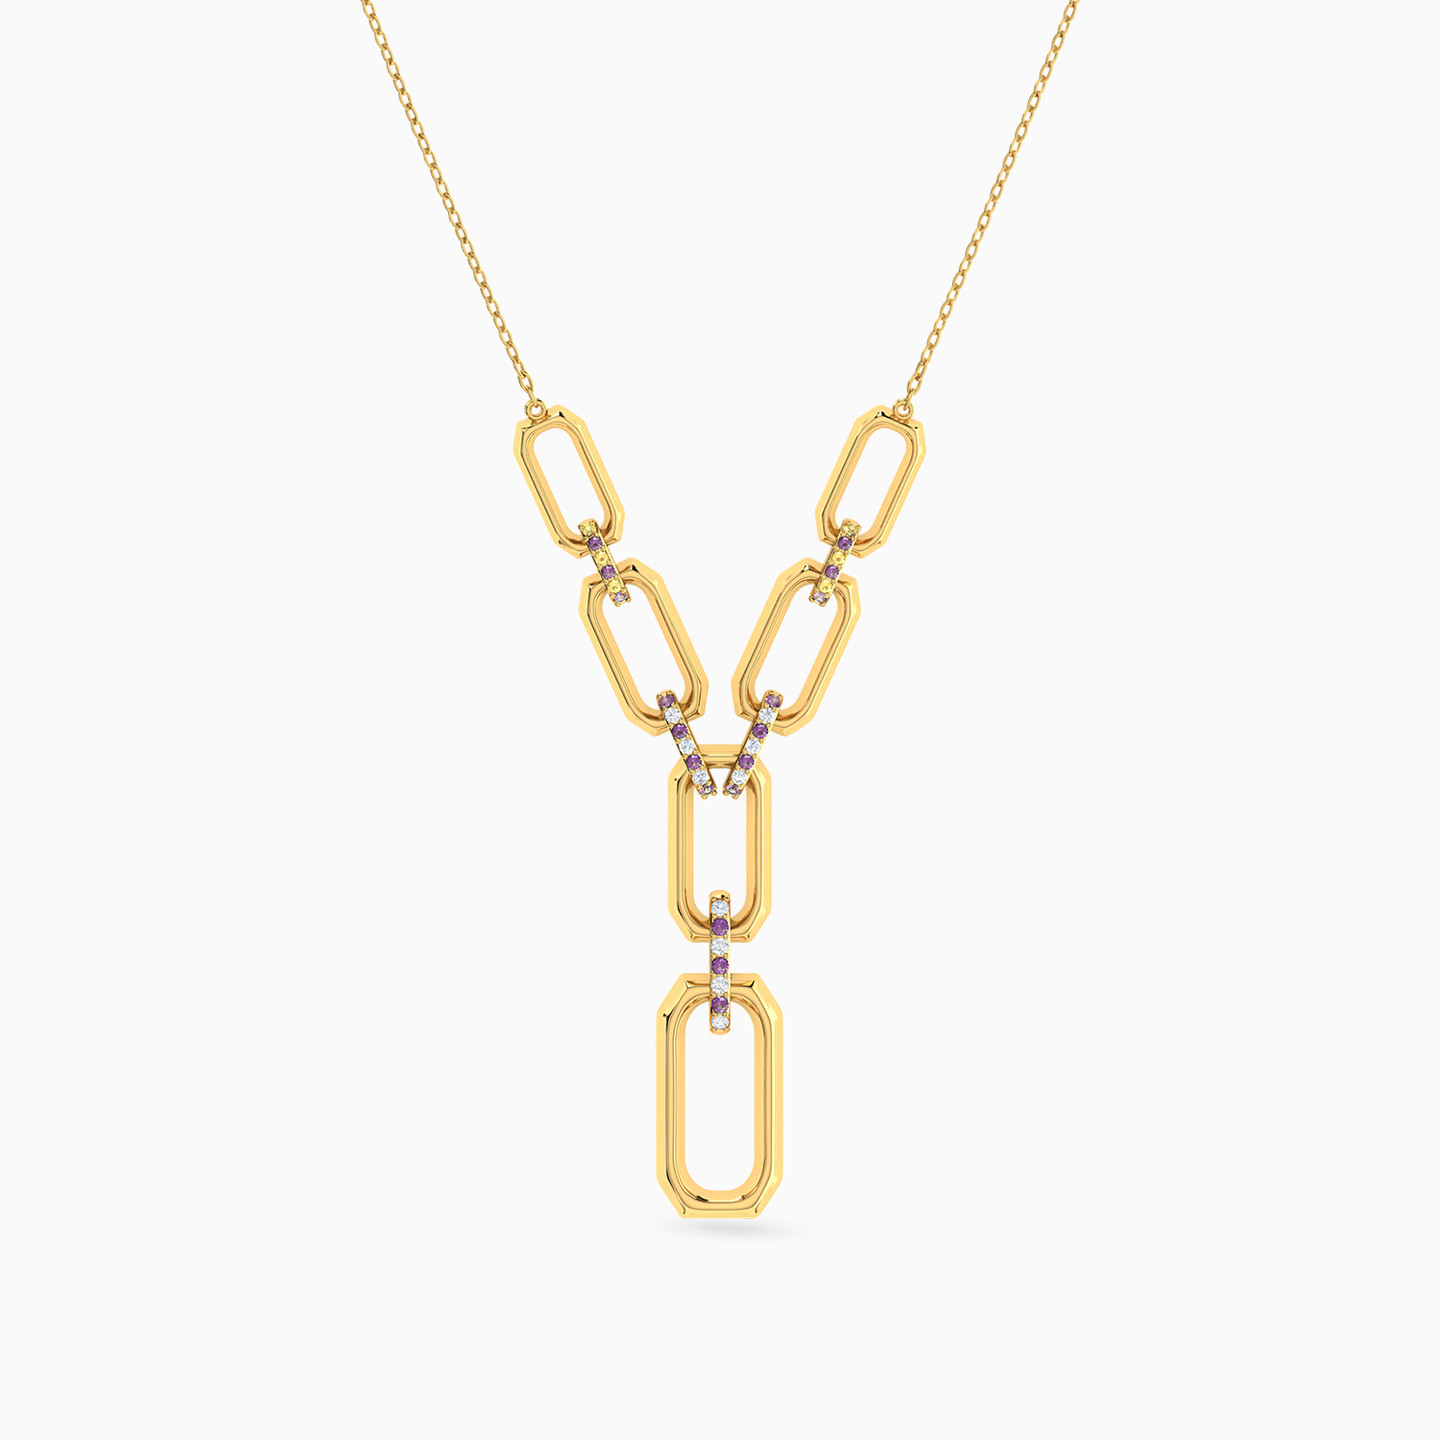 18K Gold Colored Stones Pendant Necklace - 3